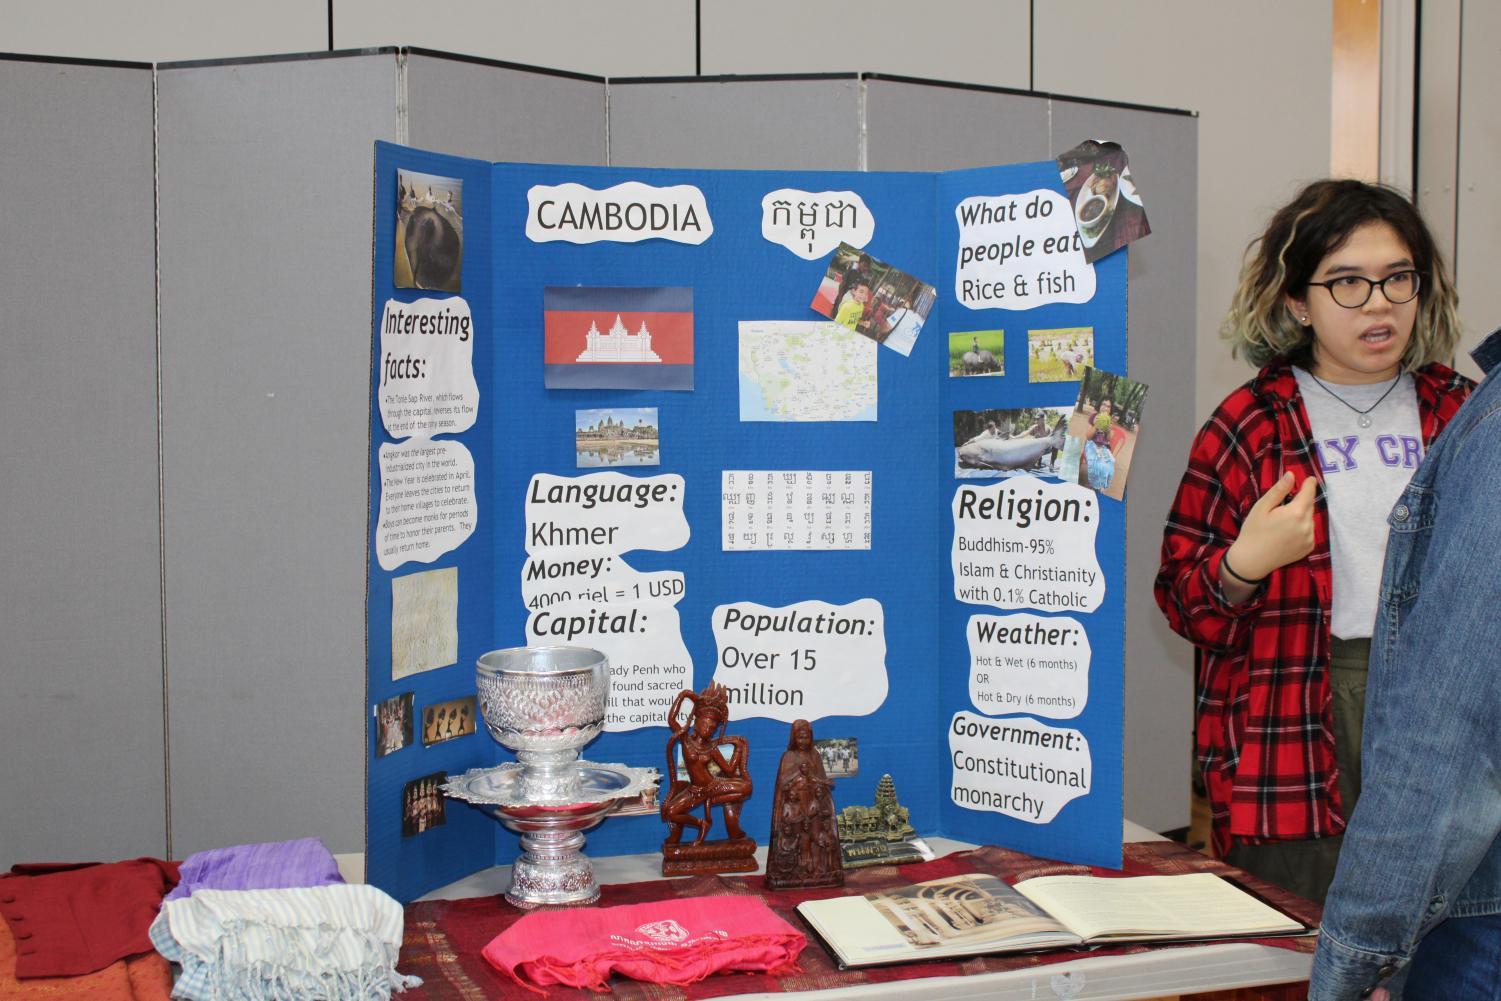 Student Chanda Chung speaks at her exhibit of Cambodia.